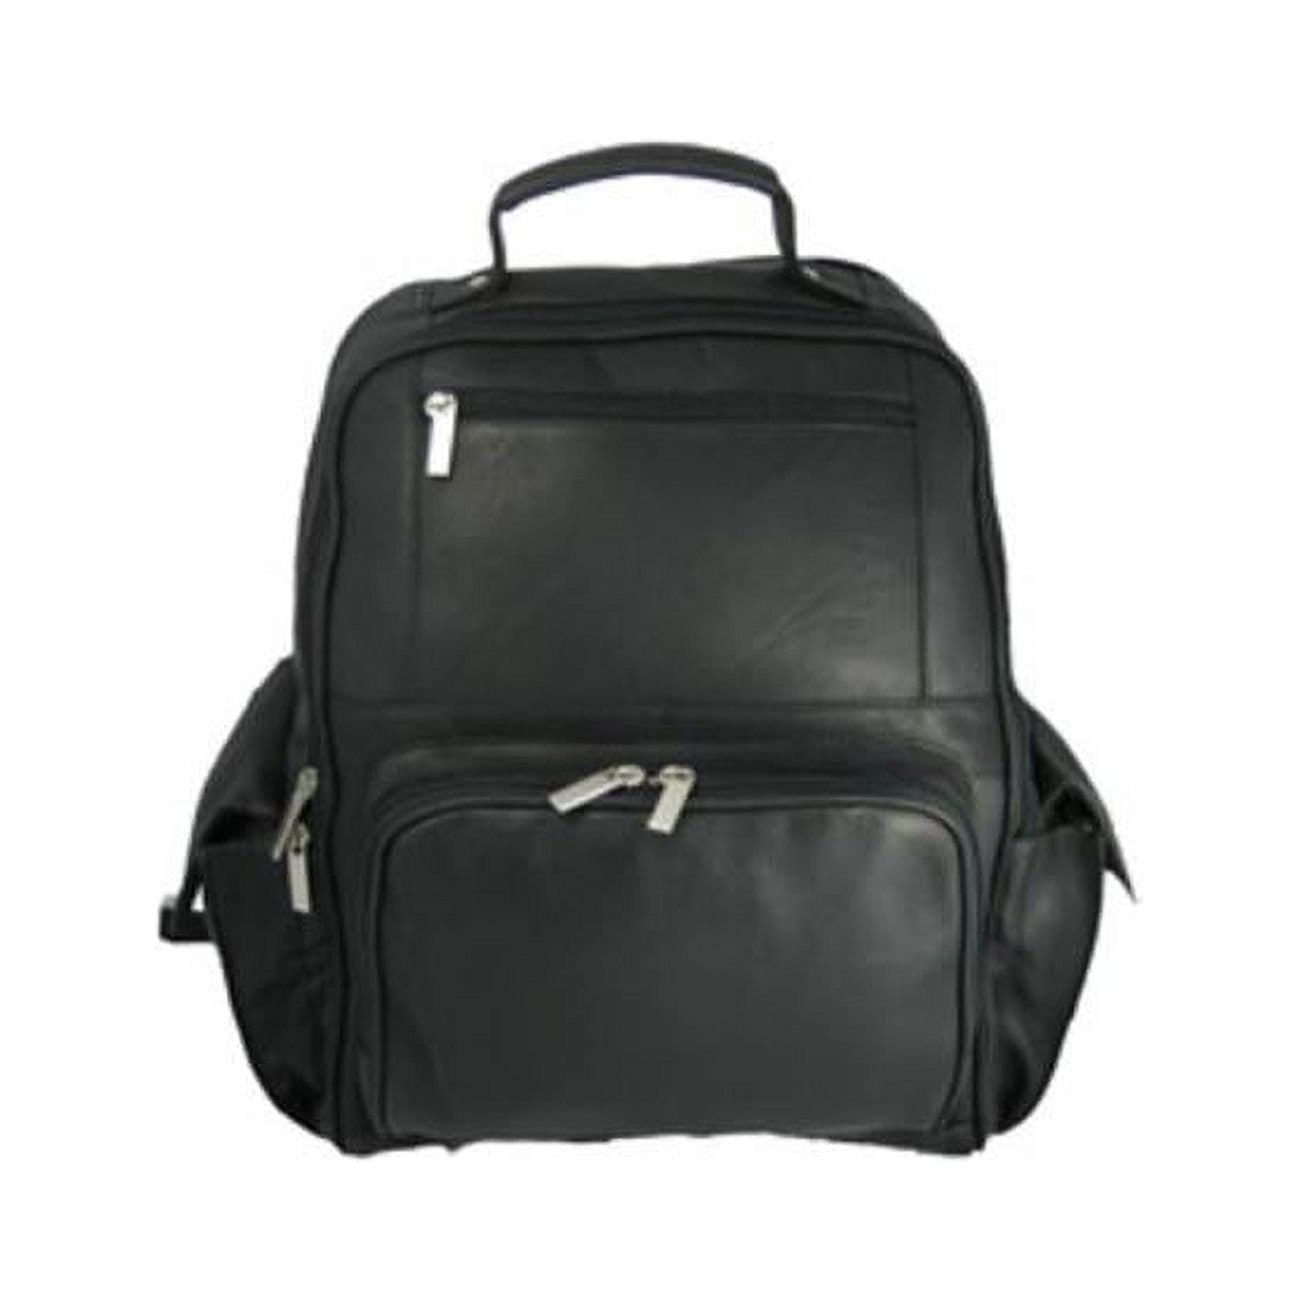 David King Leather Large Laptop Backpack - Black - Irv’s Luggage